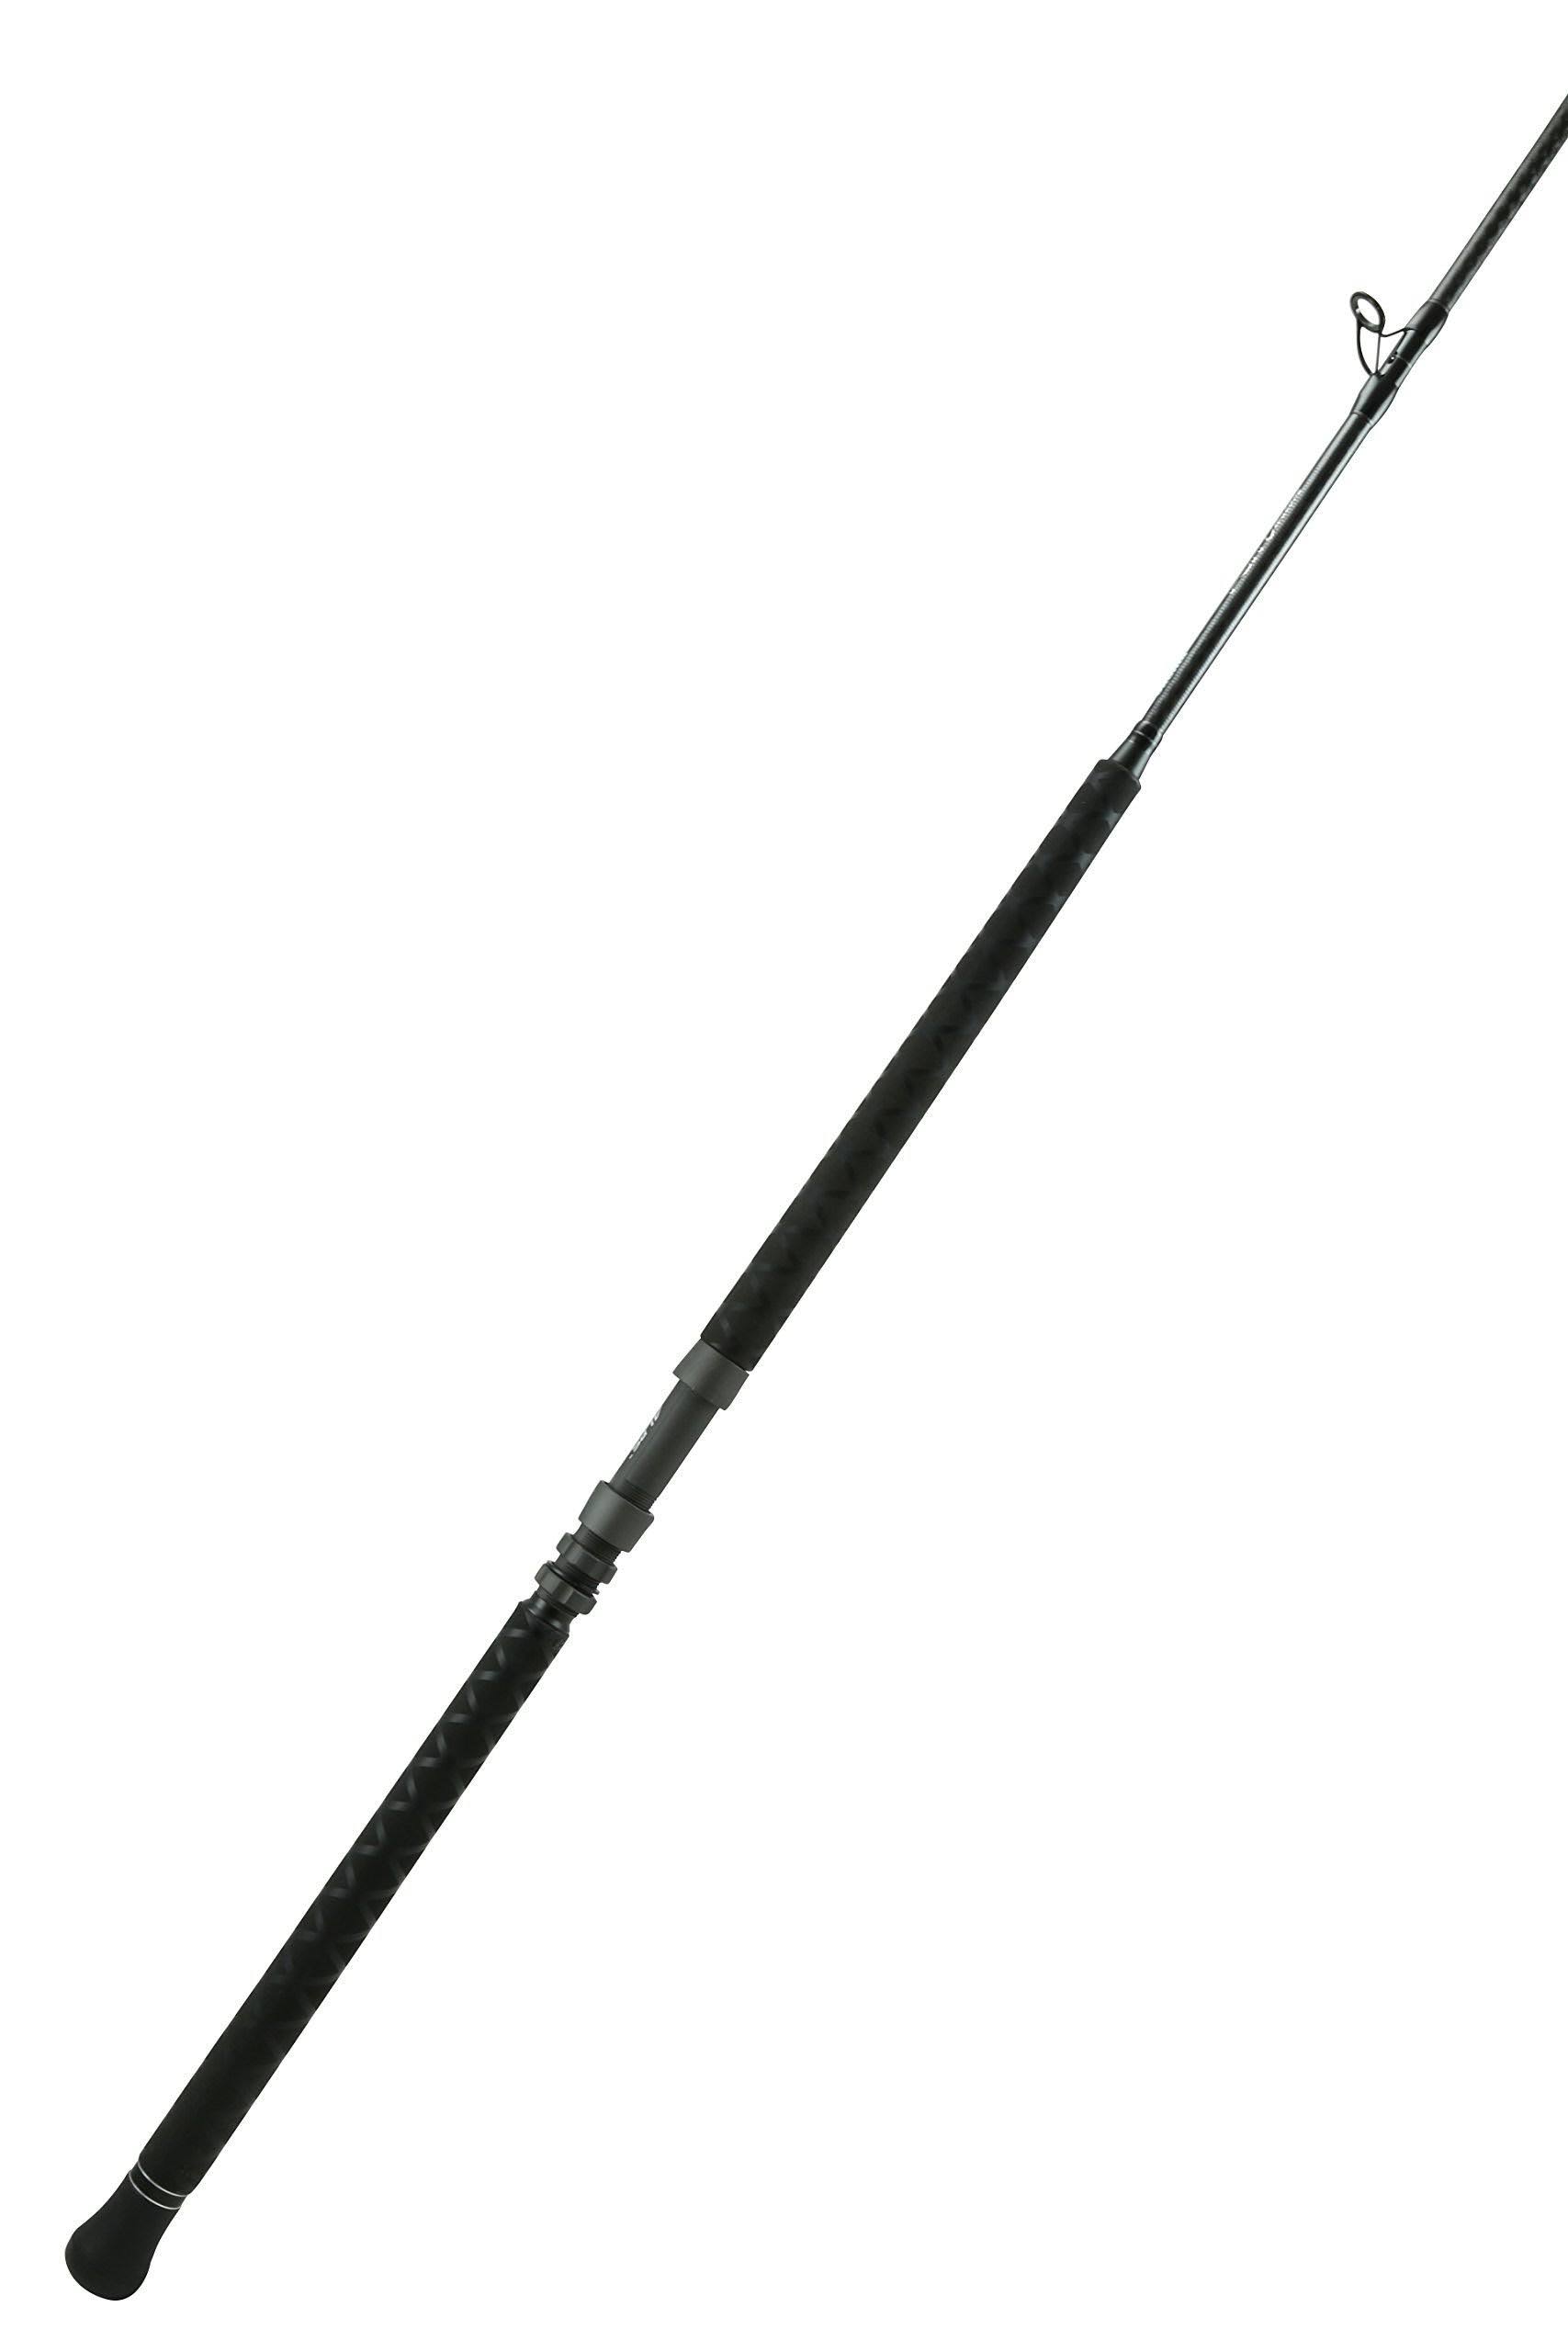 Okuma PCH Custom Lightweight Carbon Fishing Rods- PCH-C-801MH